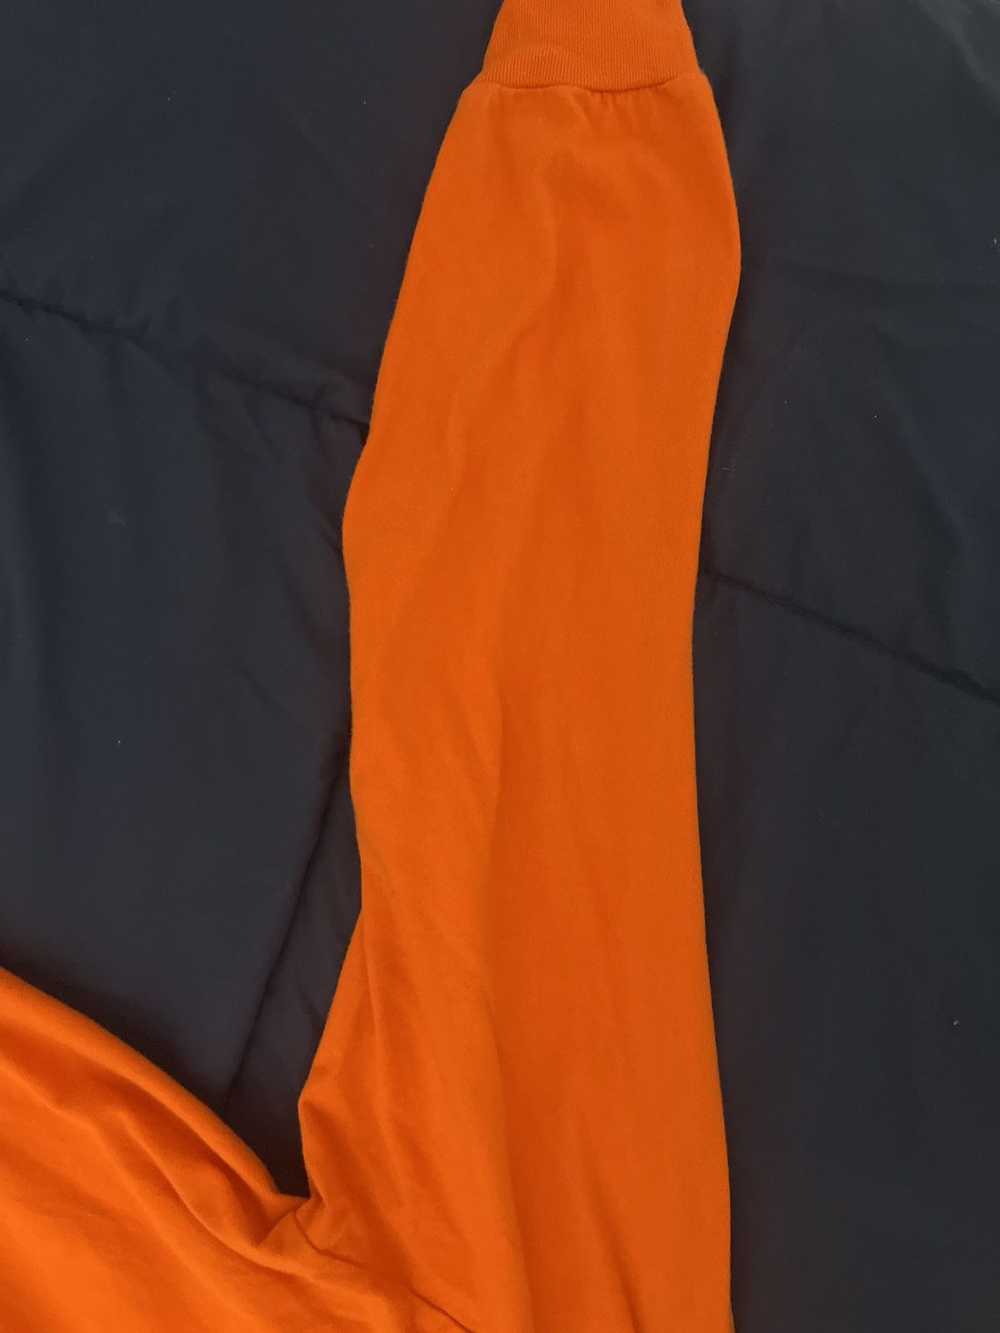 Supreme Supreme orange box logo long sleeve tee - image 3